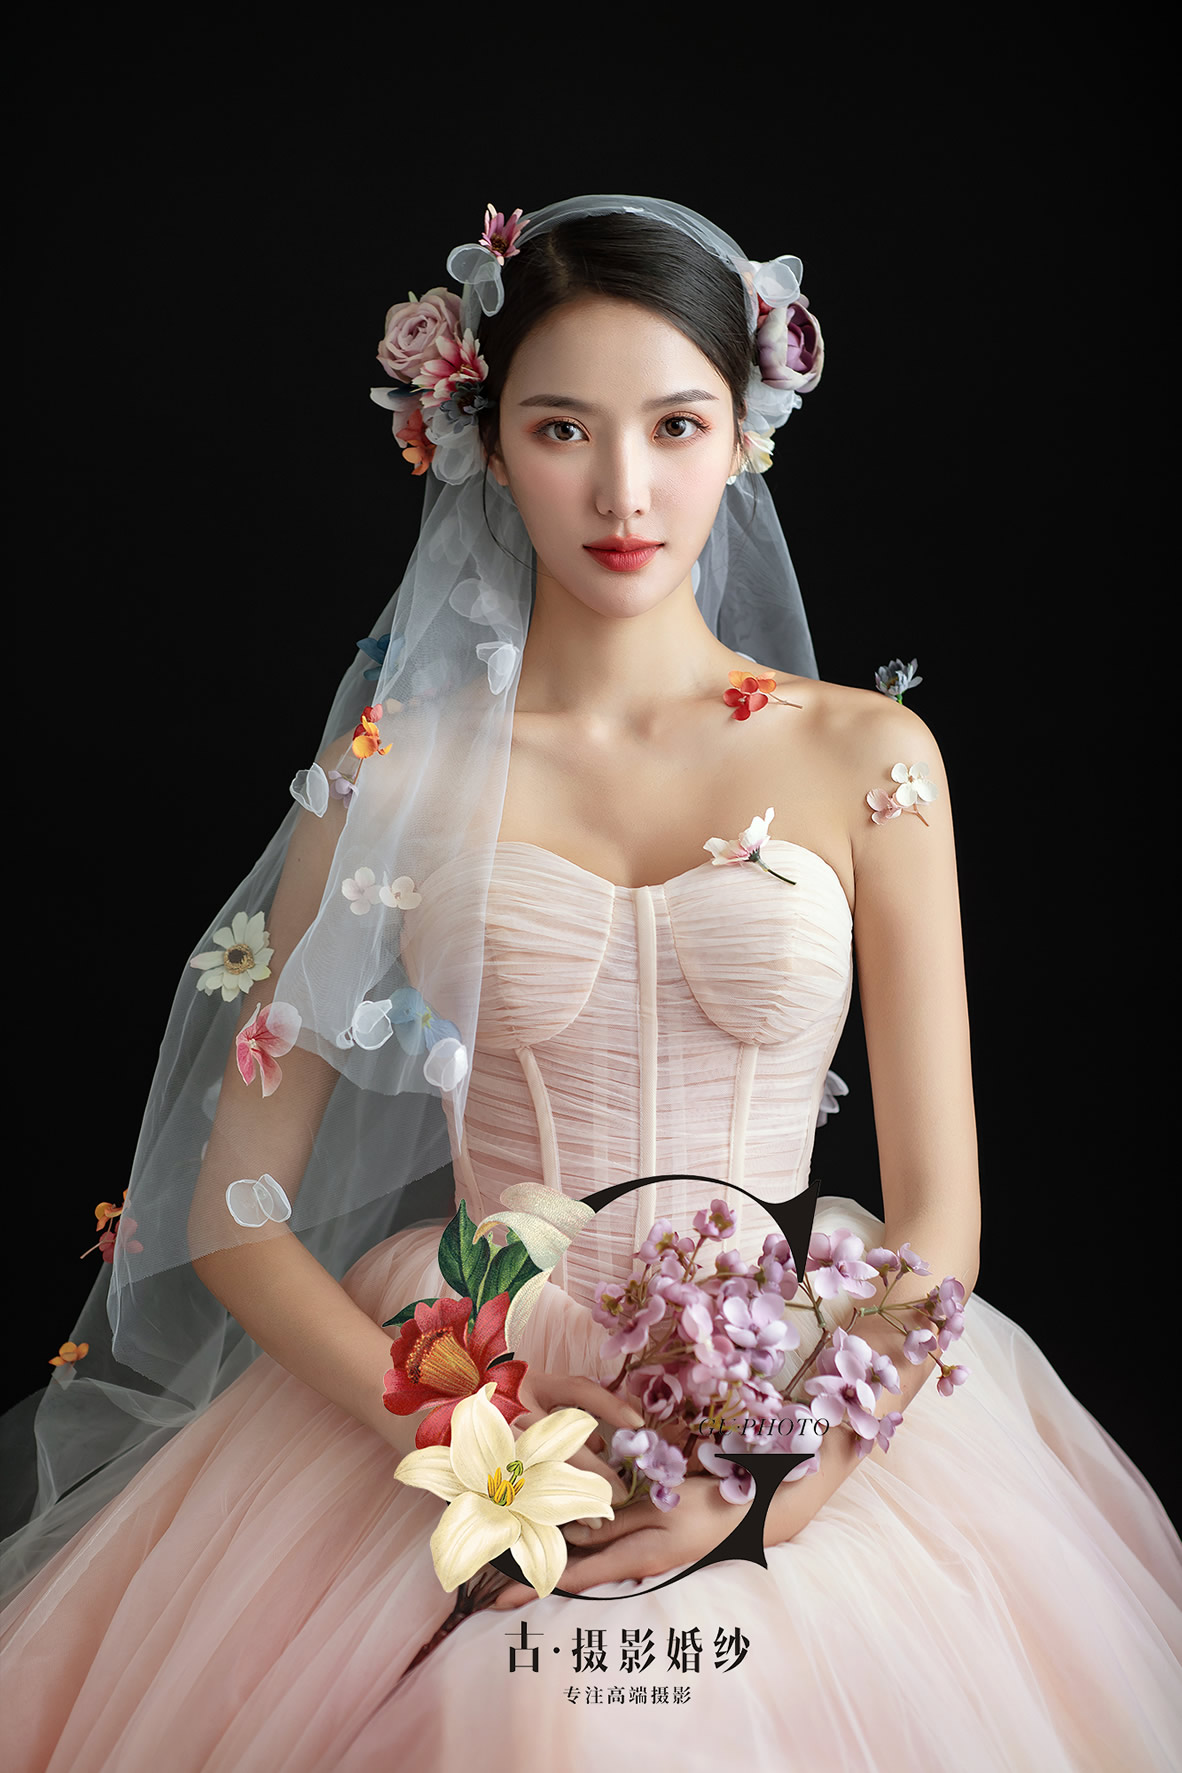 2020《MONET》系列 - 明星范 - 古摄影婚纱艺术-古摄影成都婚纱摄影艺术摄影网